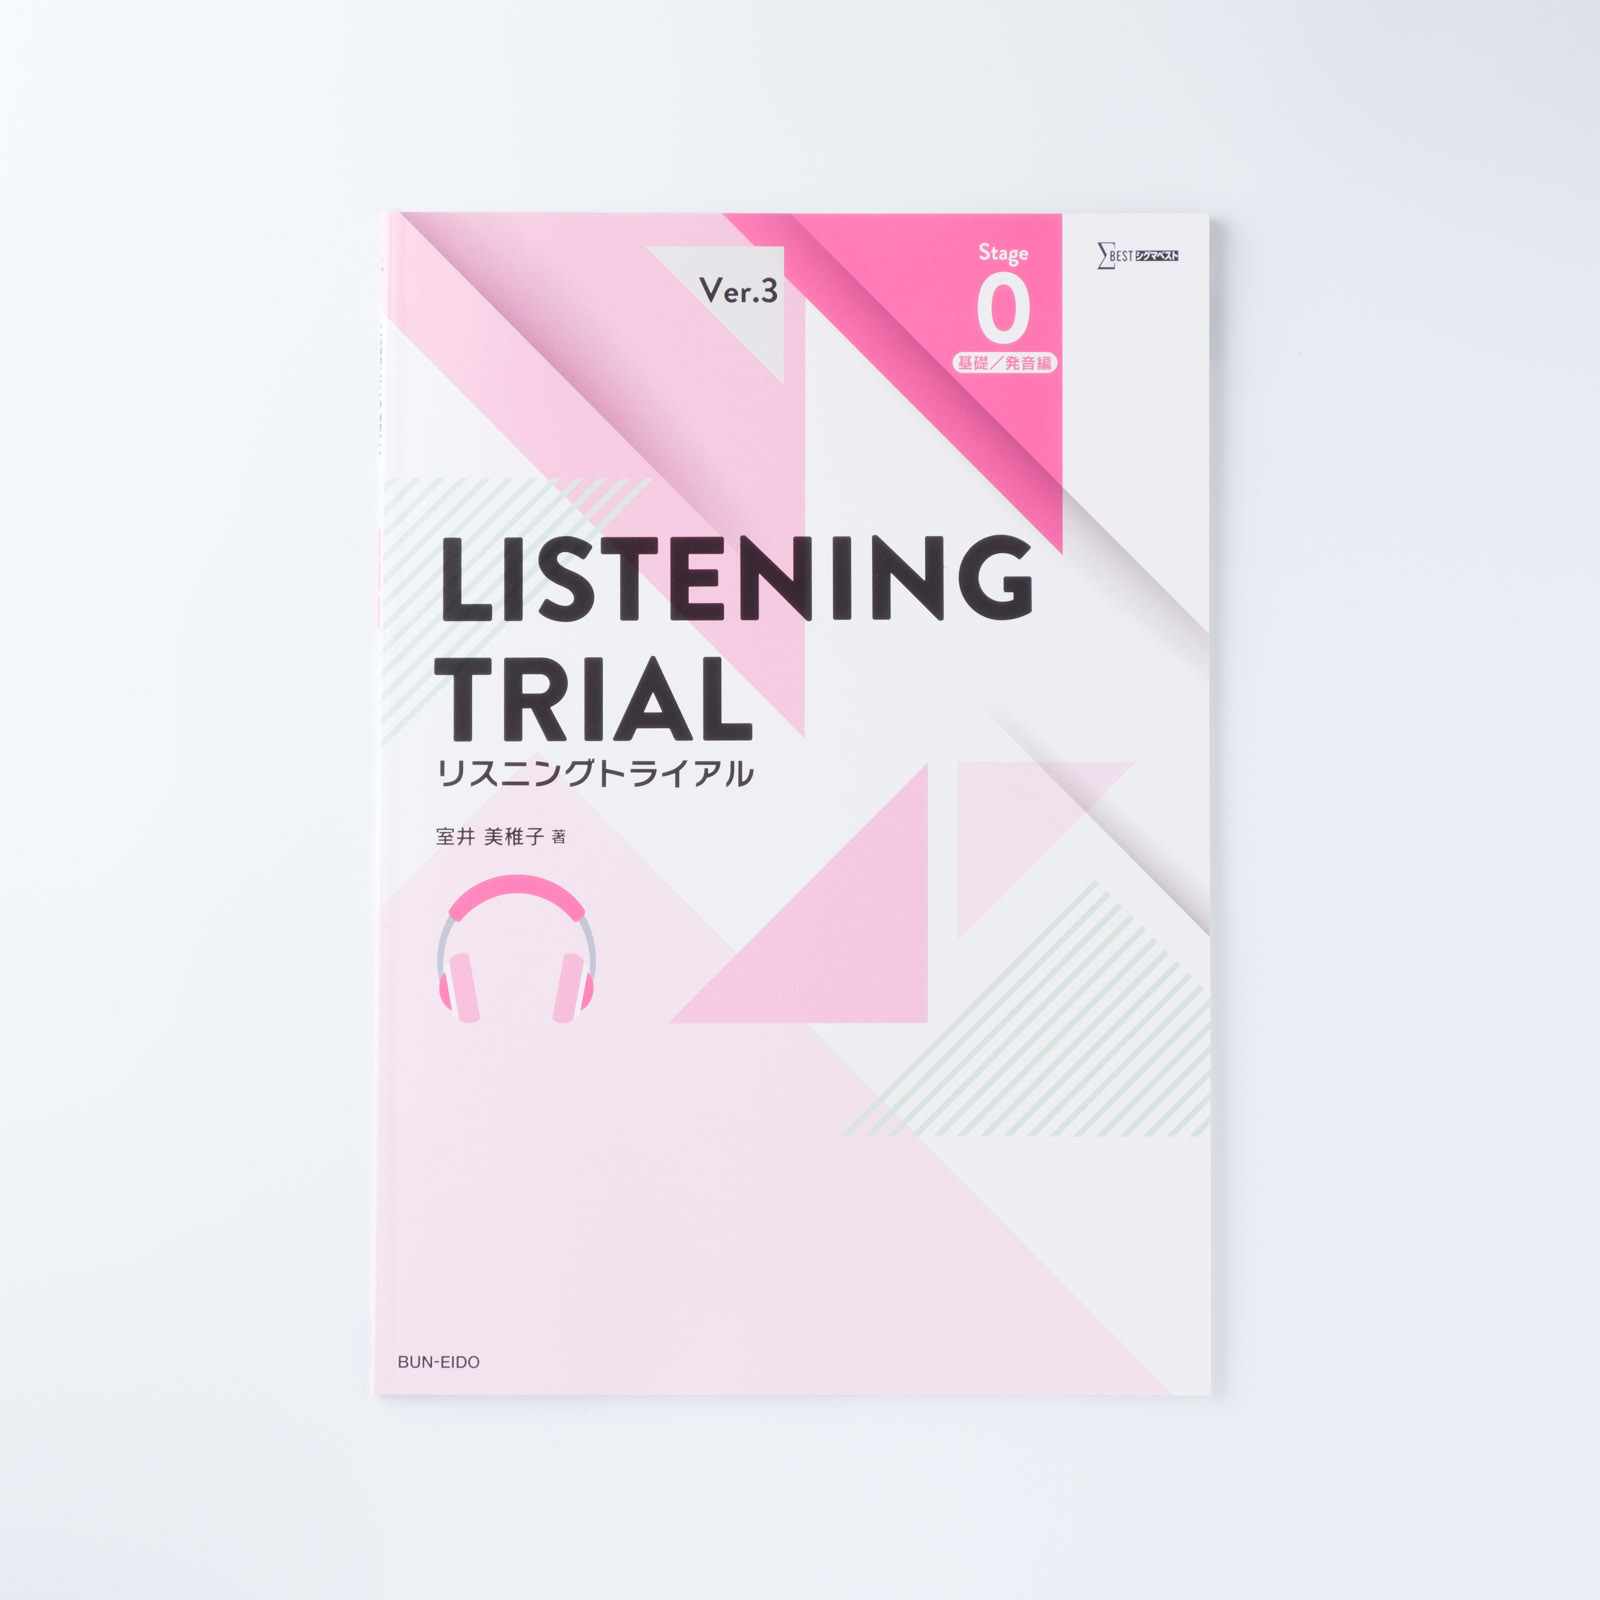 Ver.3 LISTENING TRIAL Stage 0 | シグマベストの文英堂